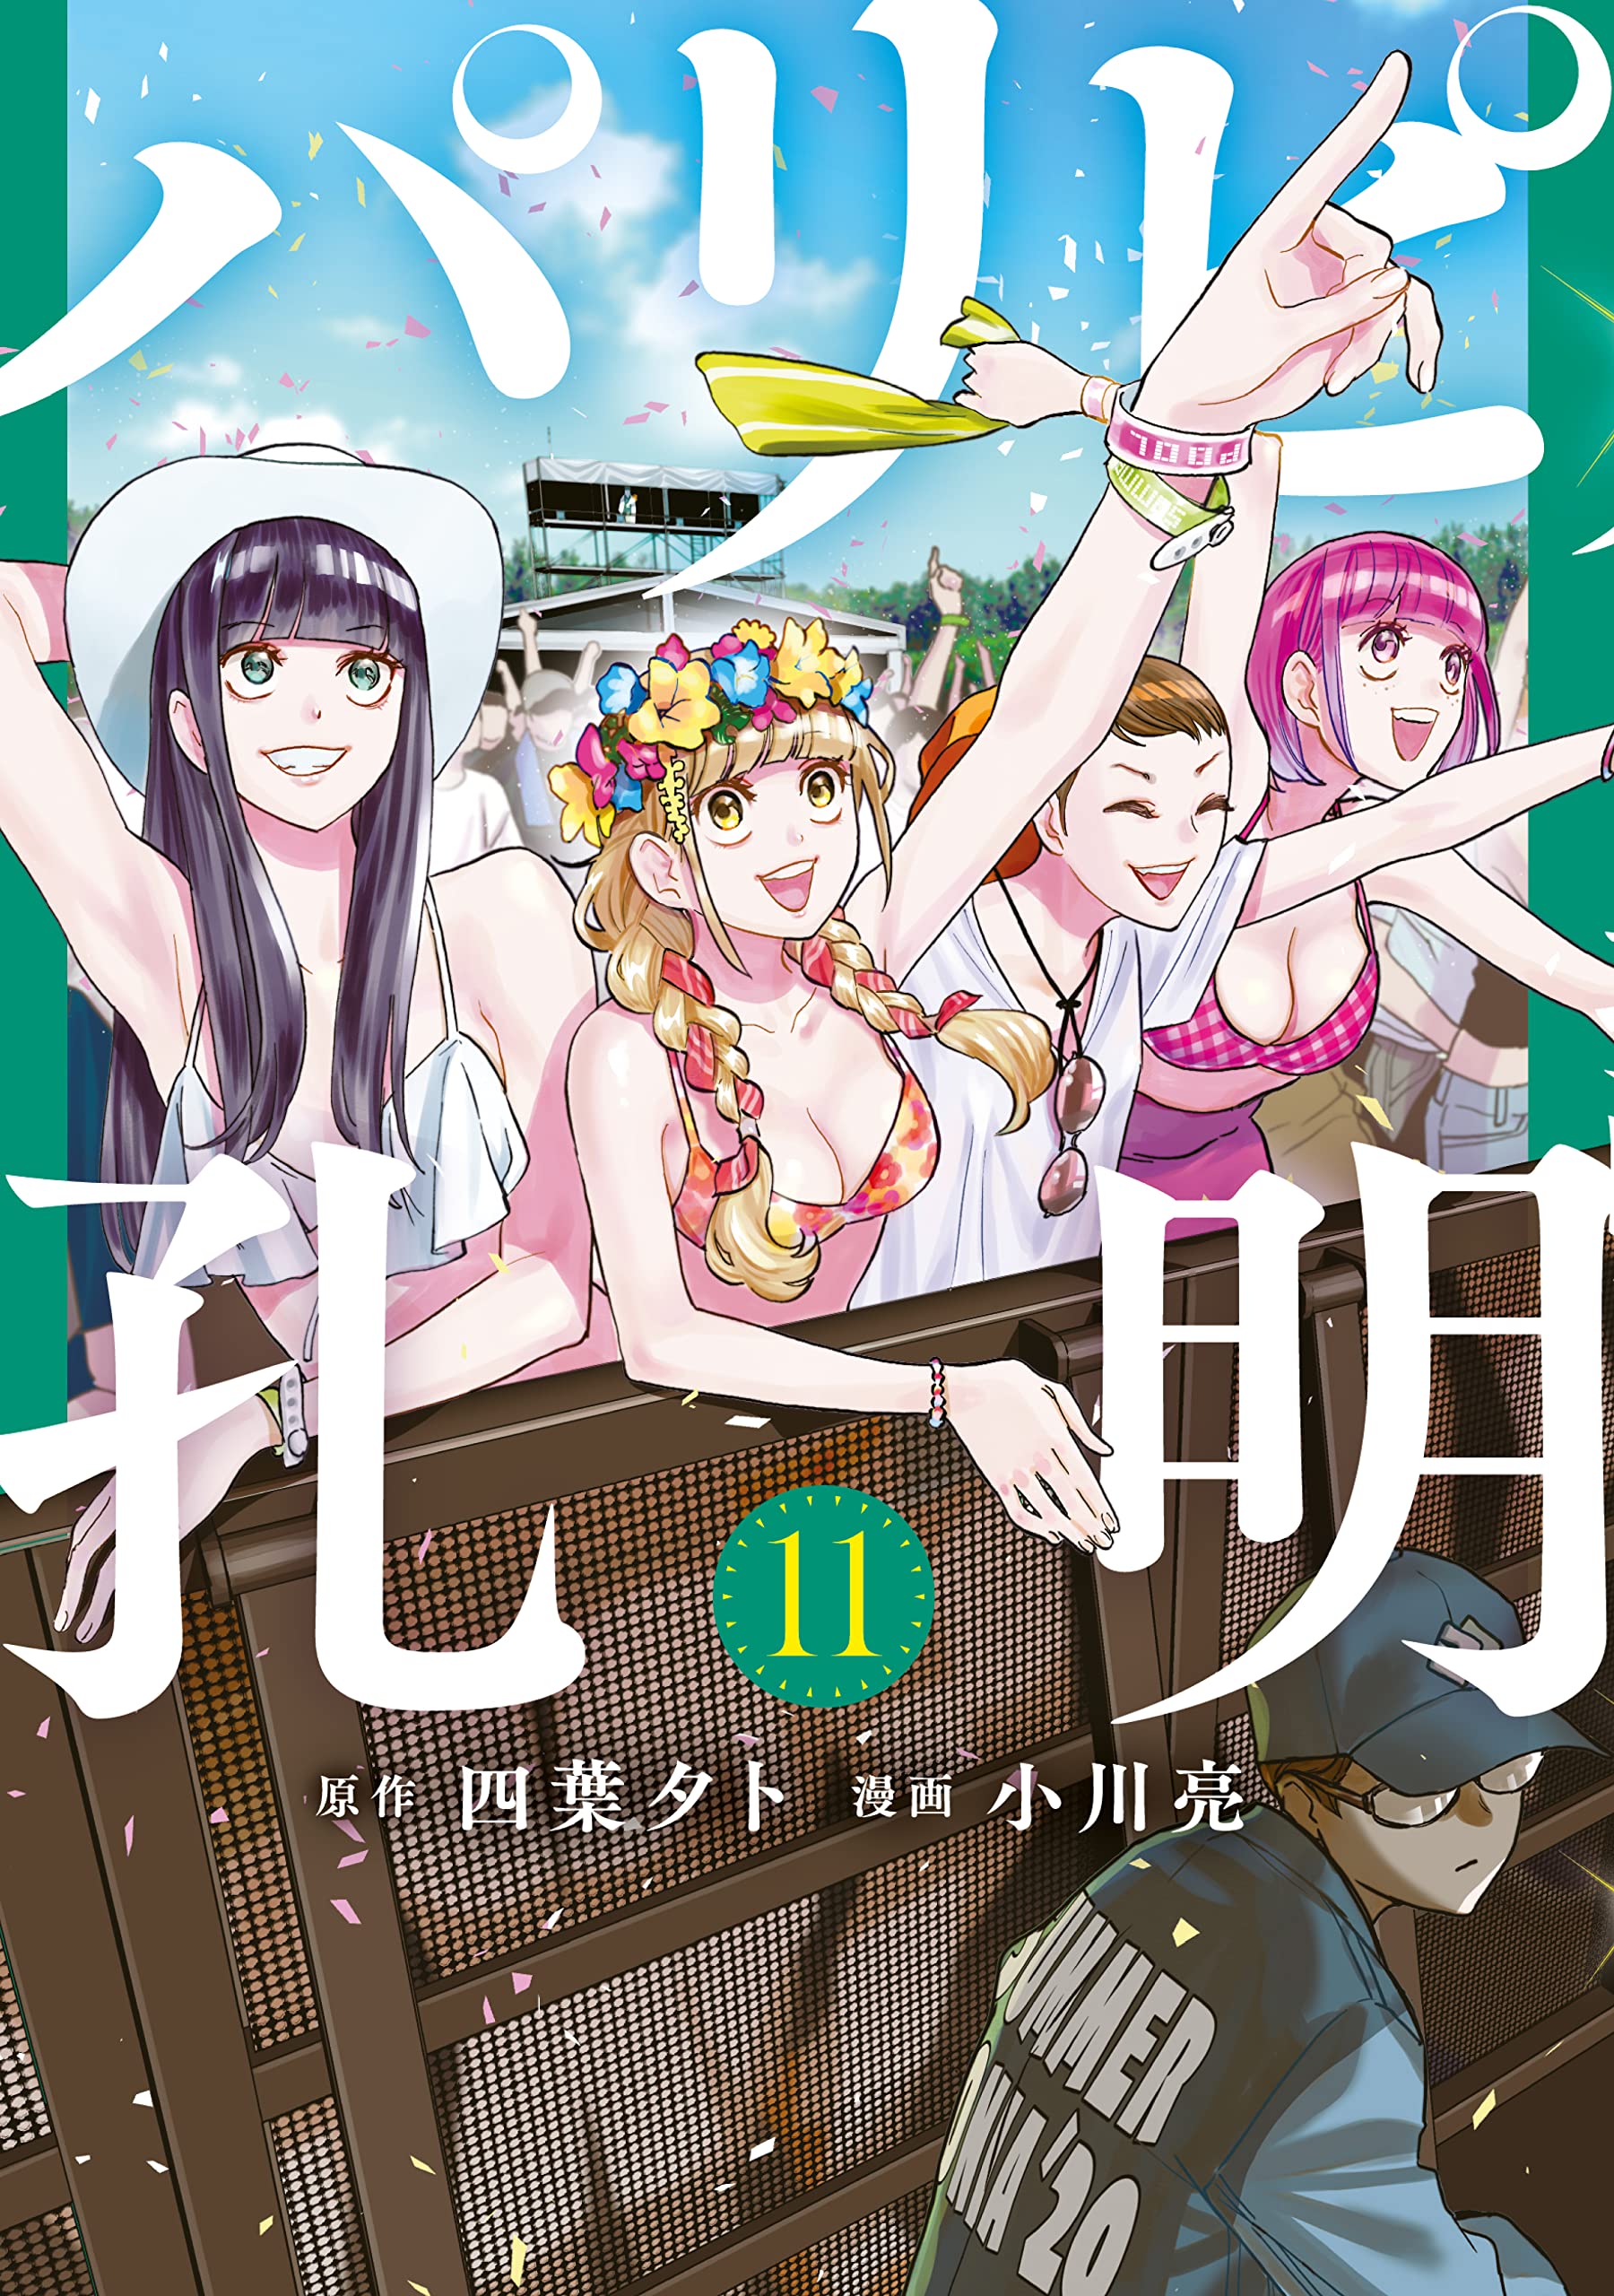 Read Paripi Koumei Manga on Mangakakalot